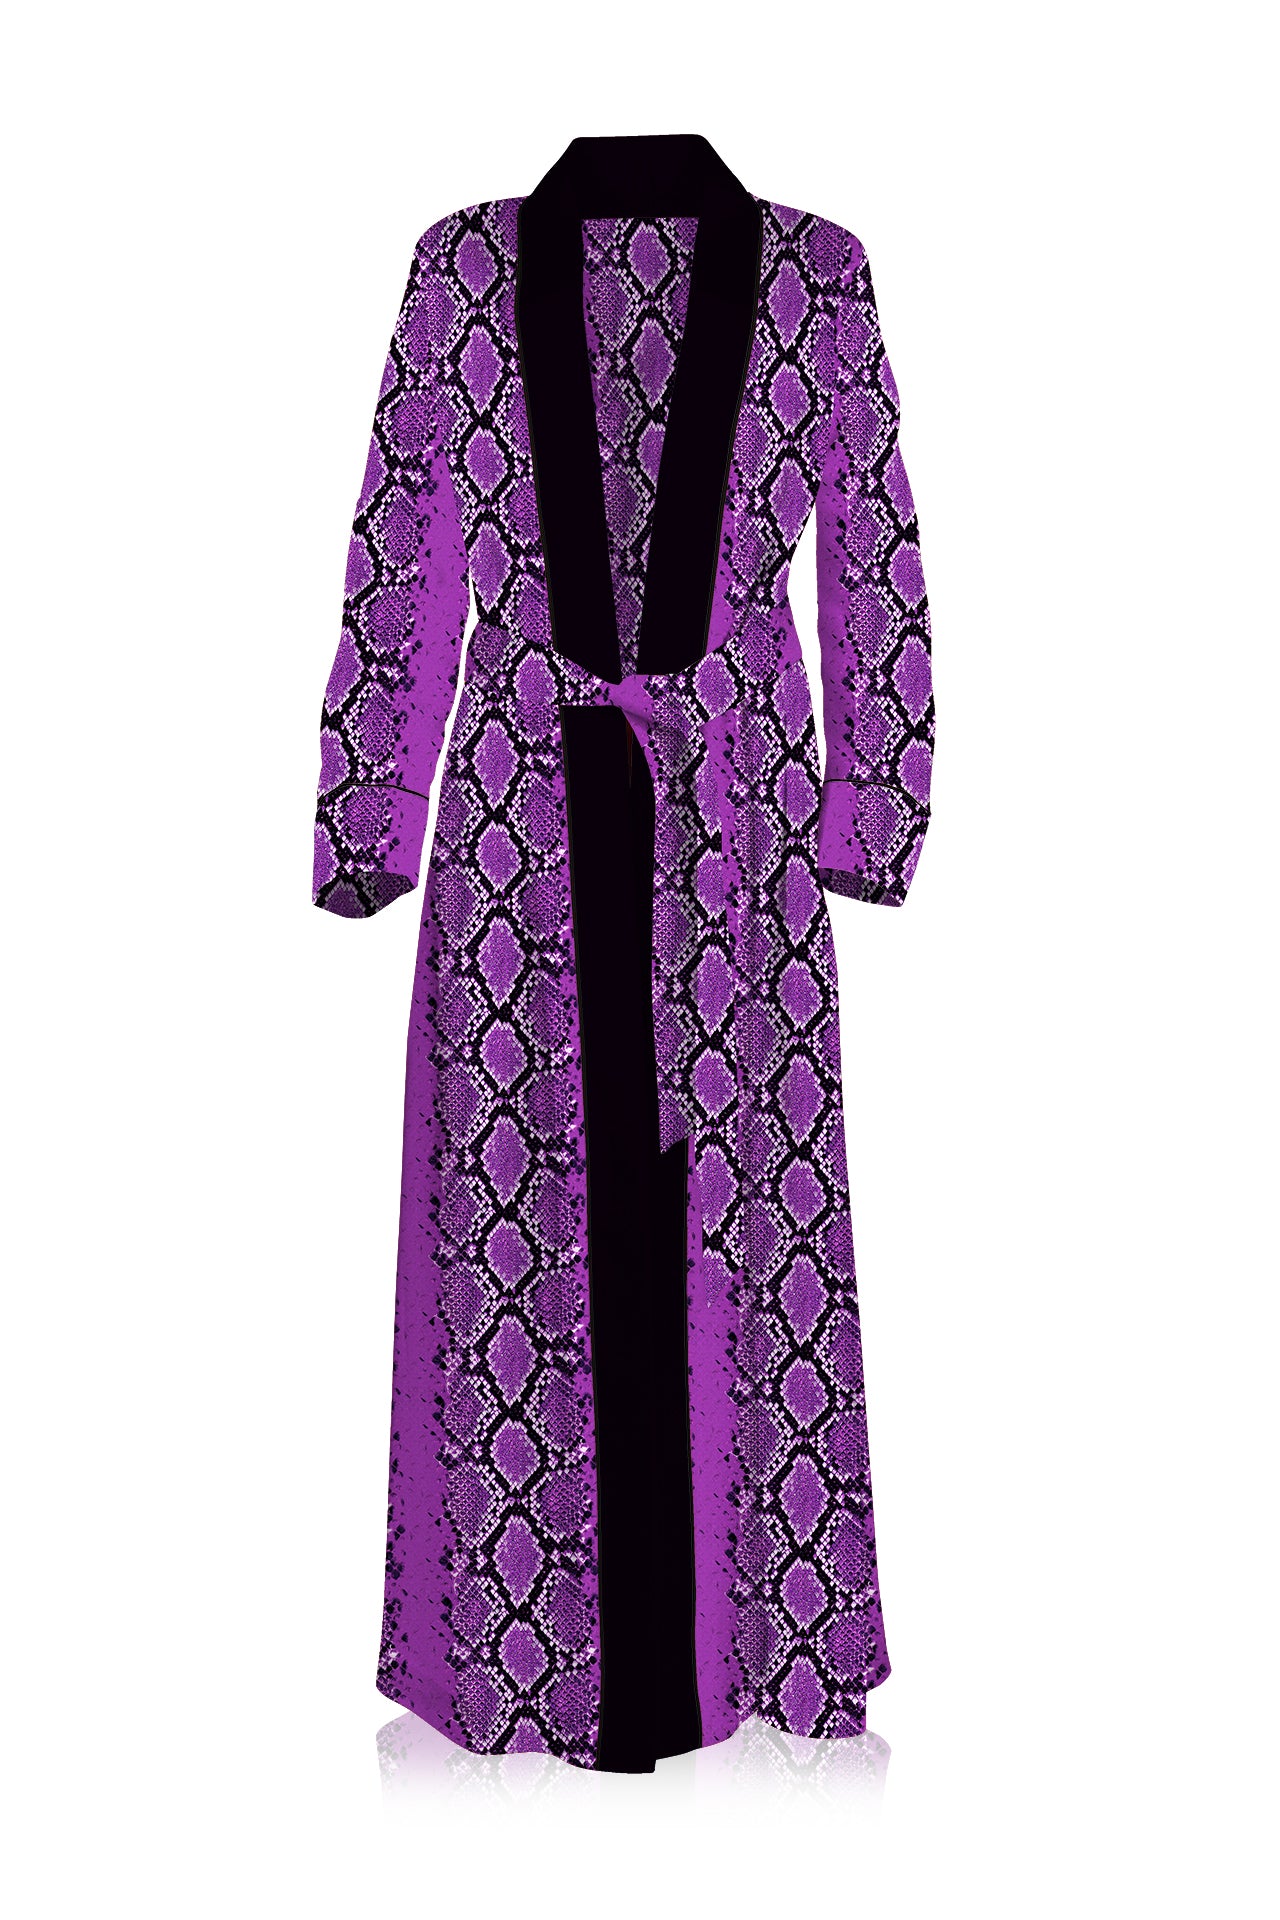 "snake kimono" "beautiful kimono" "Kyle X Shahida" "dark purple silk robe" 